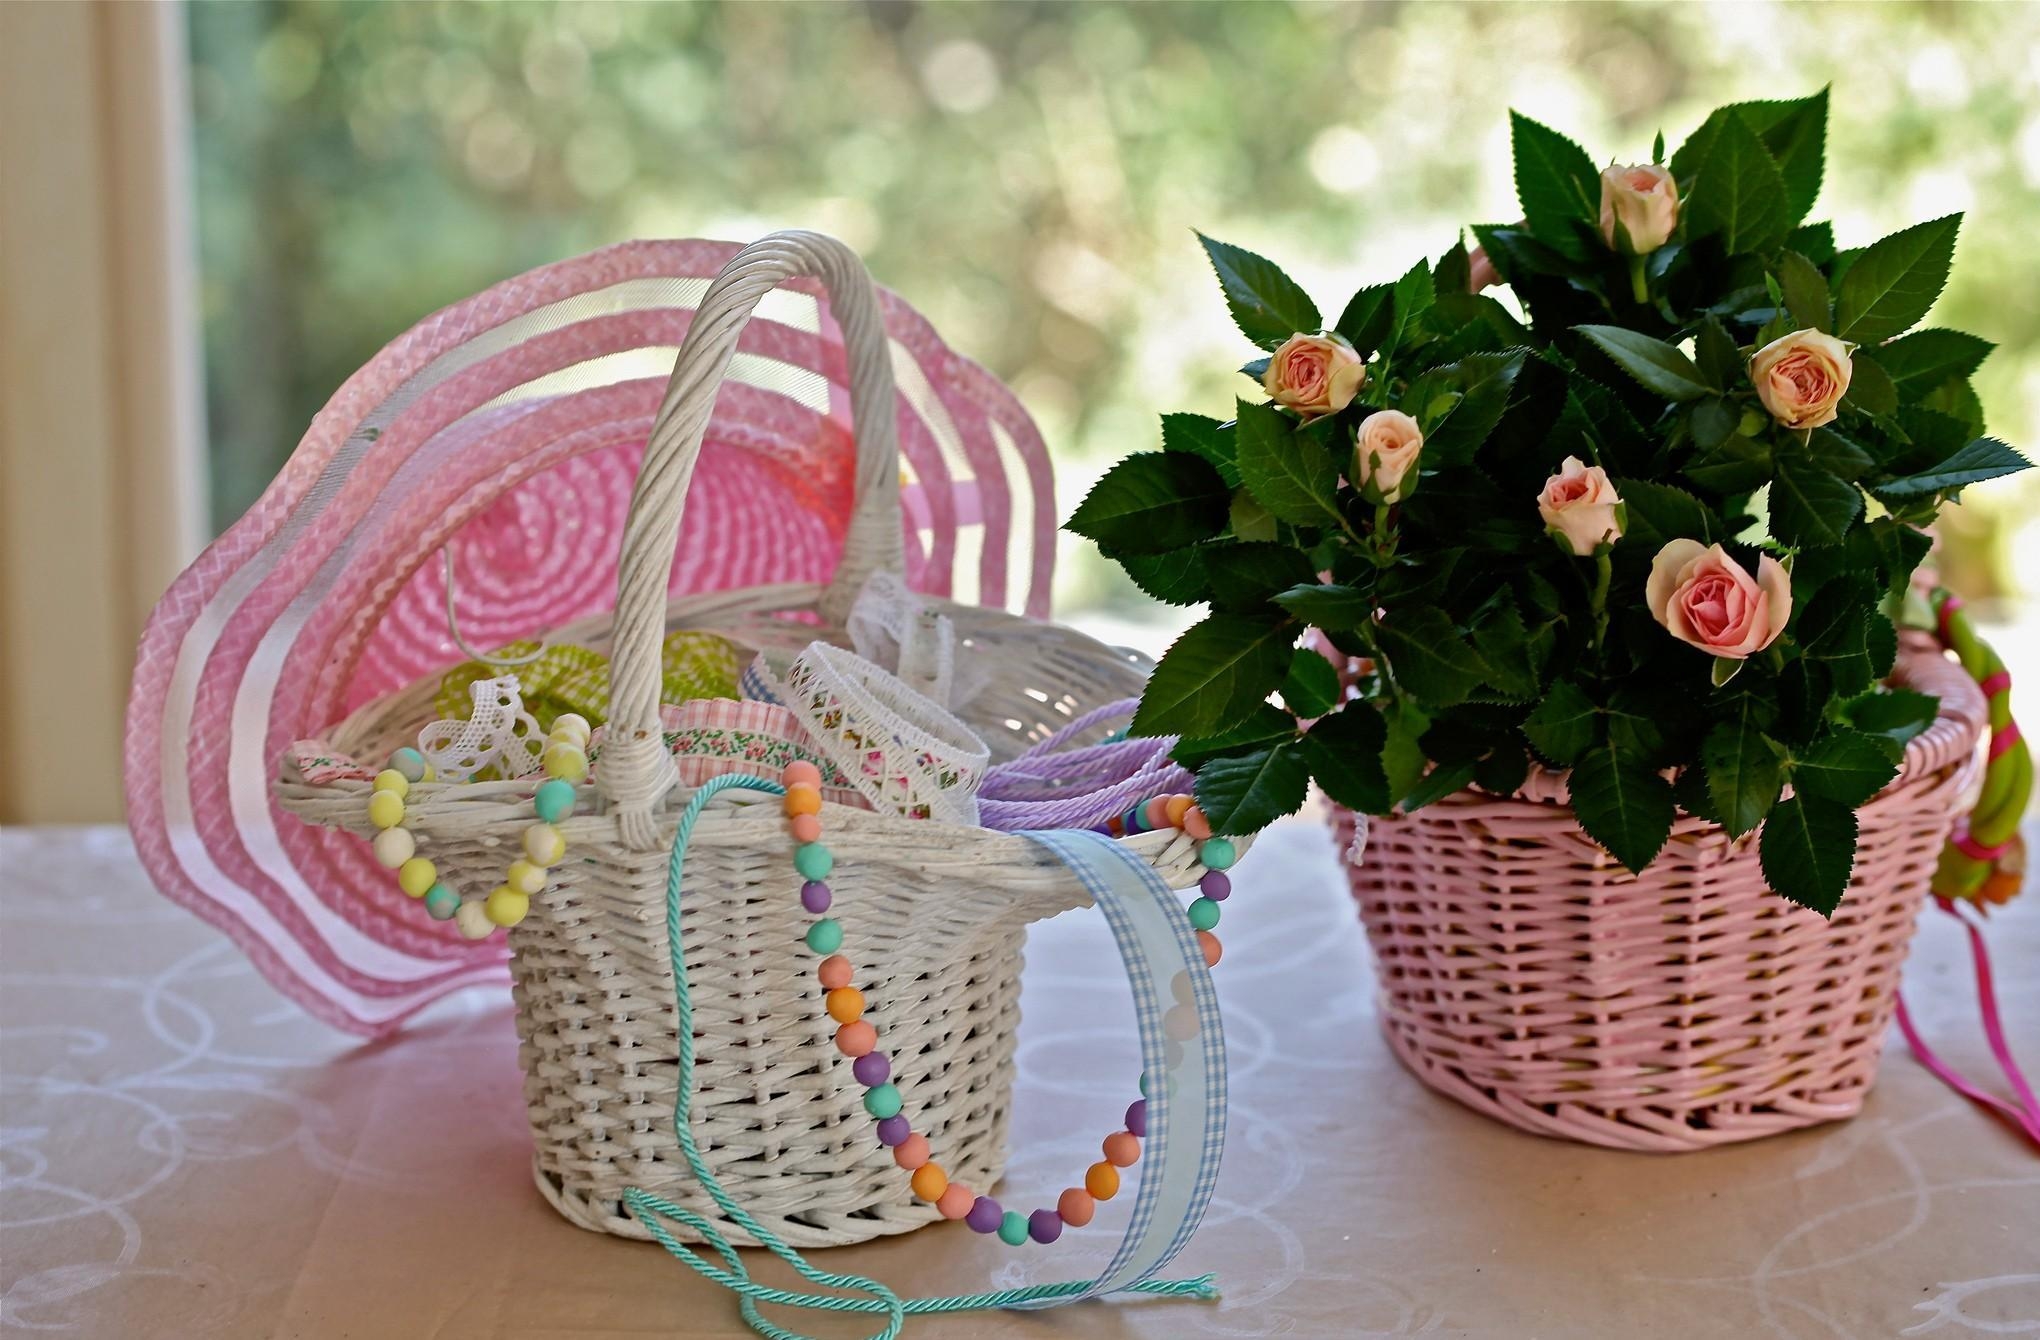 baskets, flowers, roses, beads, tape, basket, hat, braid